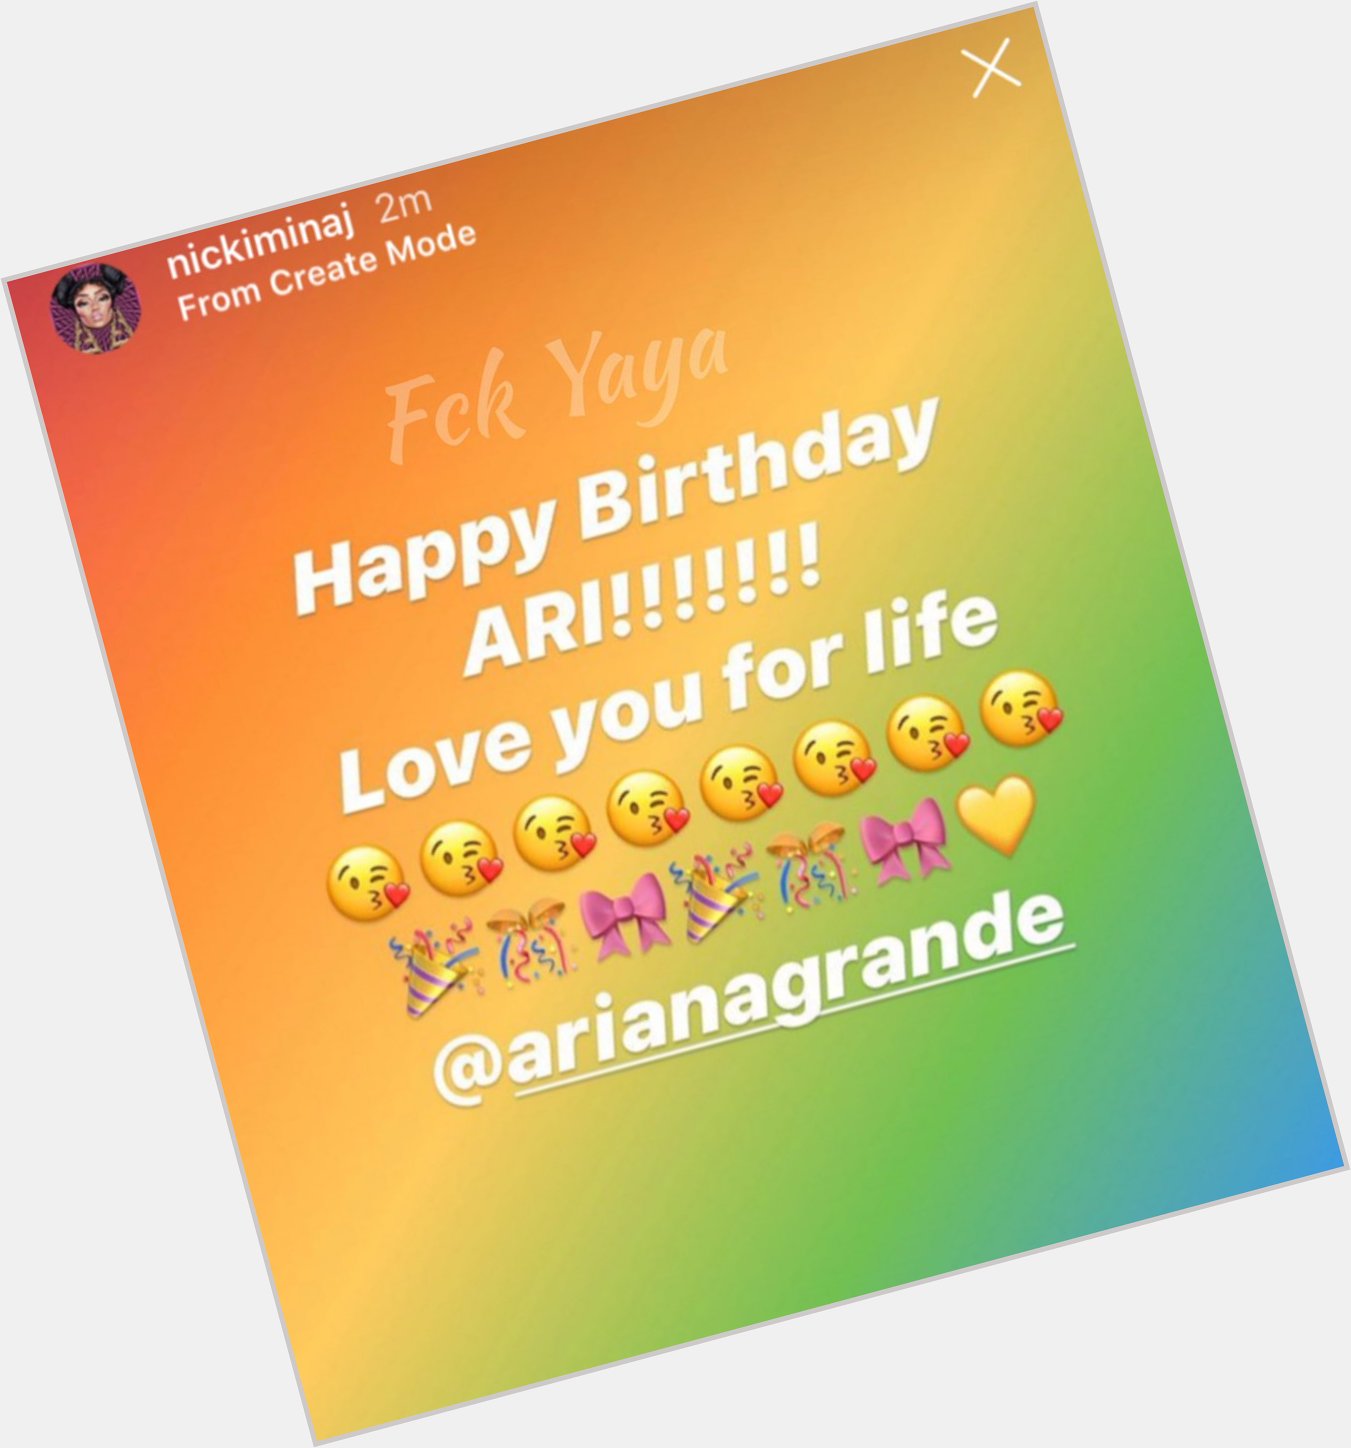 Nicki Minaj wishes Ariana Grande Happy Birthday 